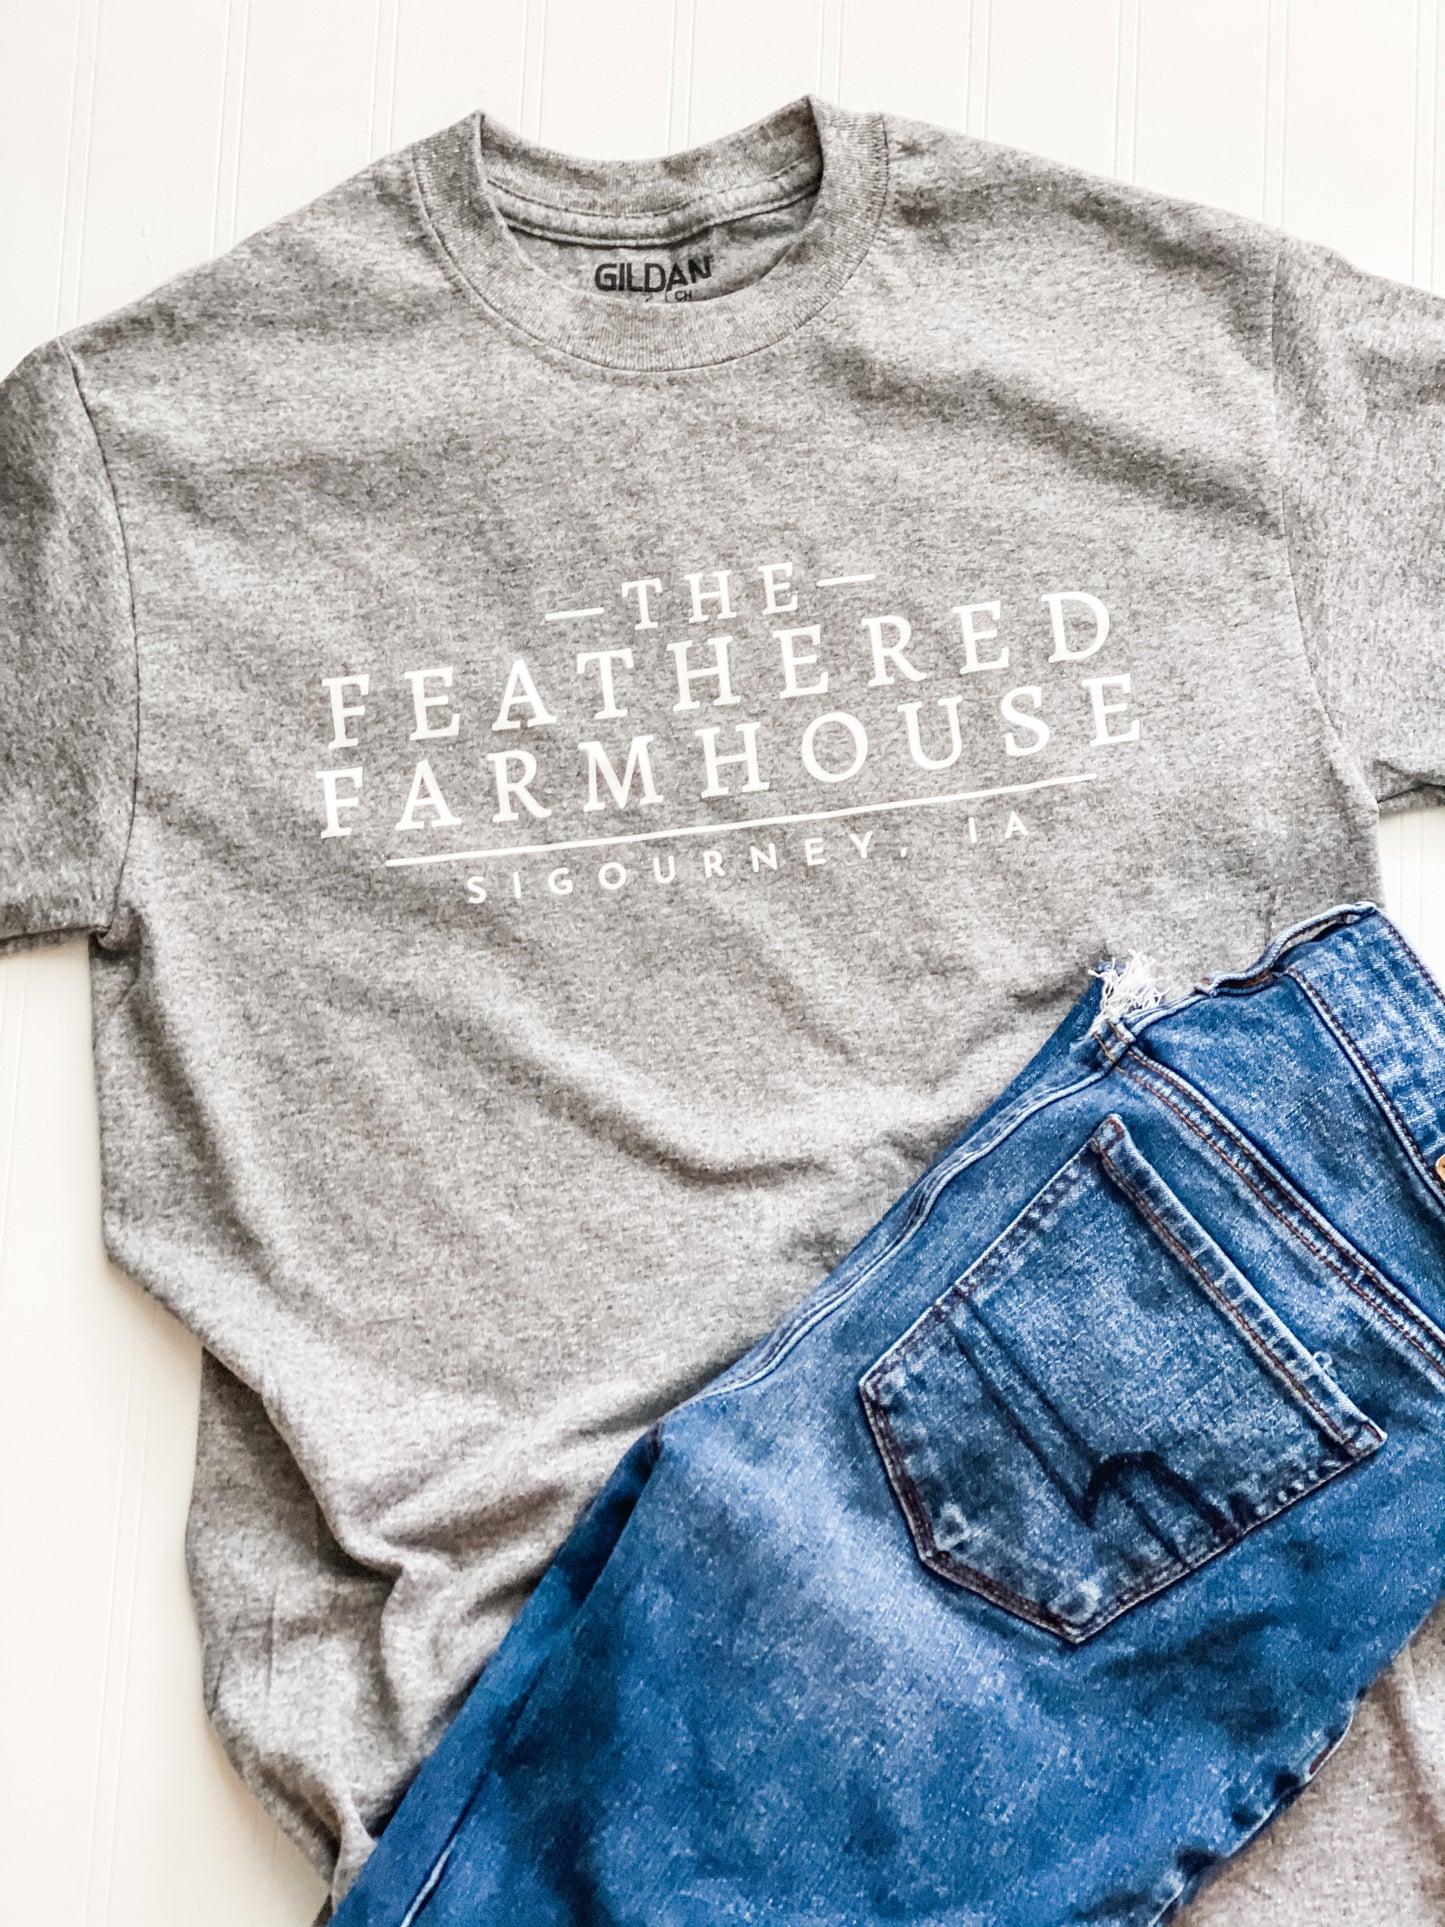 Feathered Farmhouse Shirts